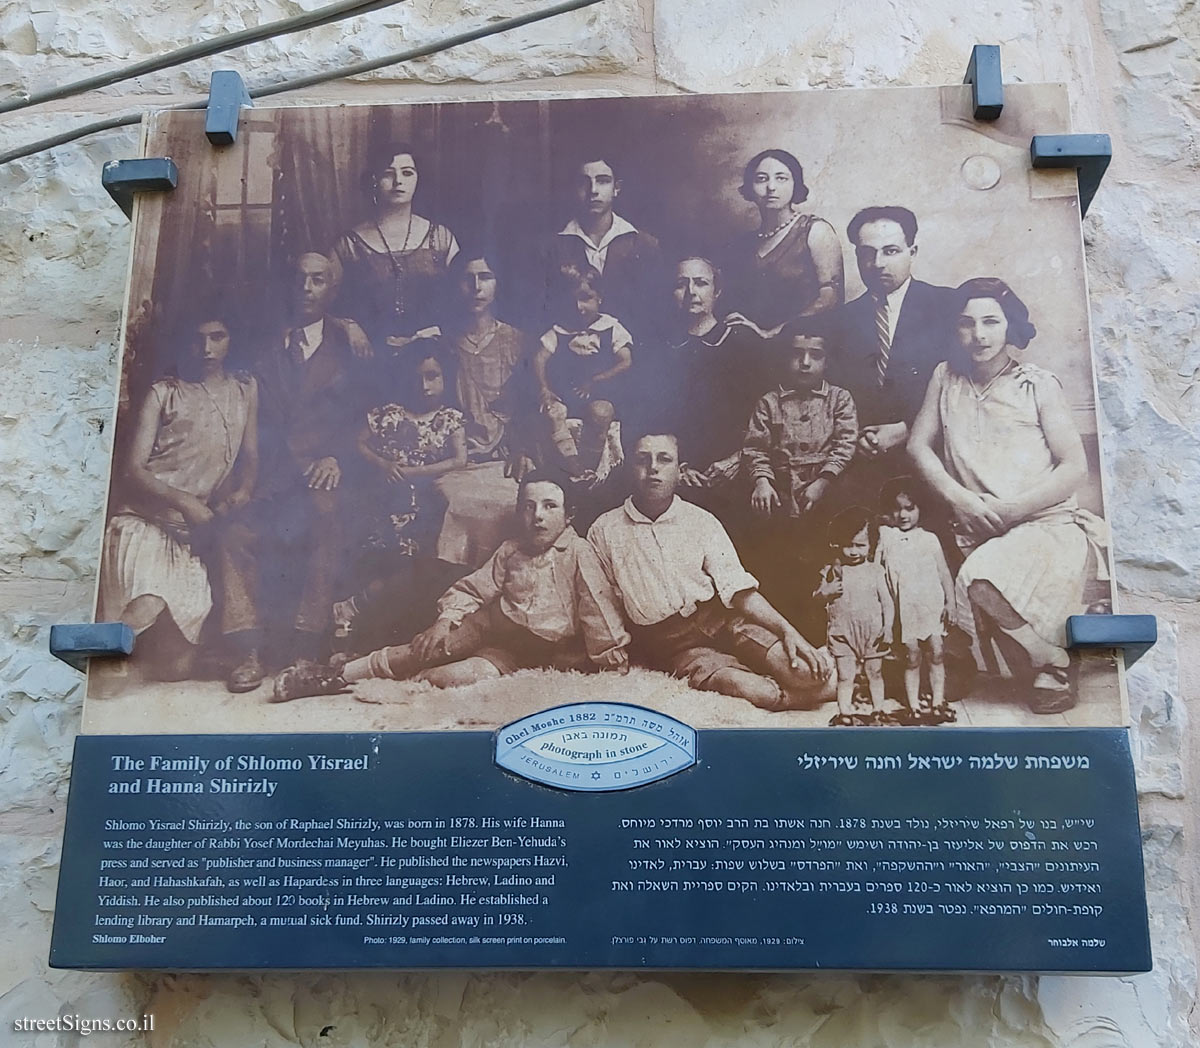 Jerusalem - Photograph in stone - The Family of Shlomo Yisrael and Hanna Shirizly